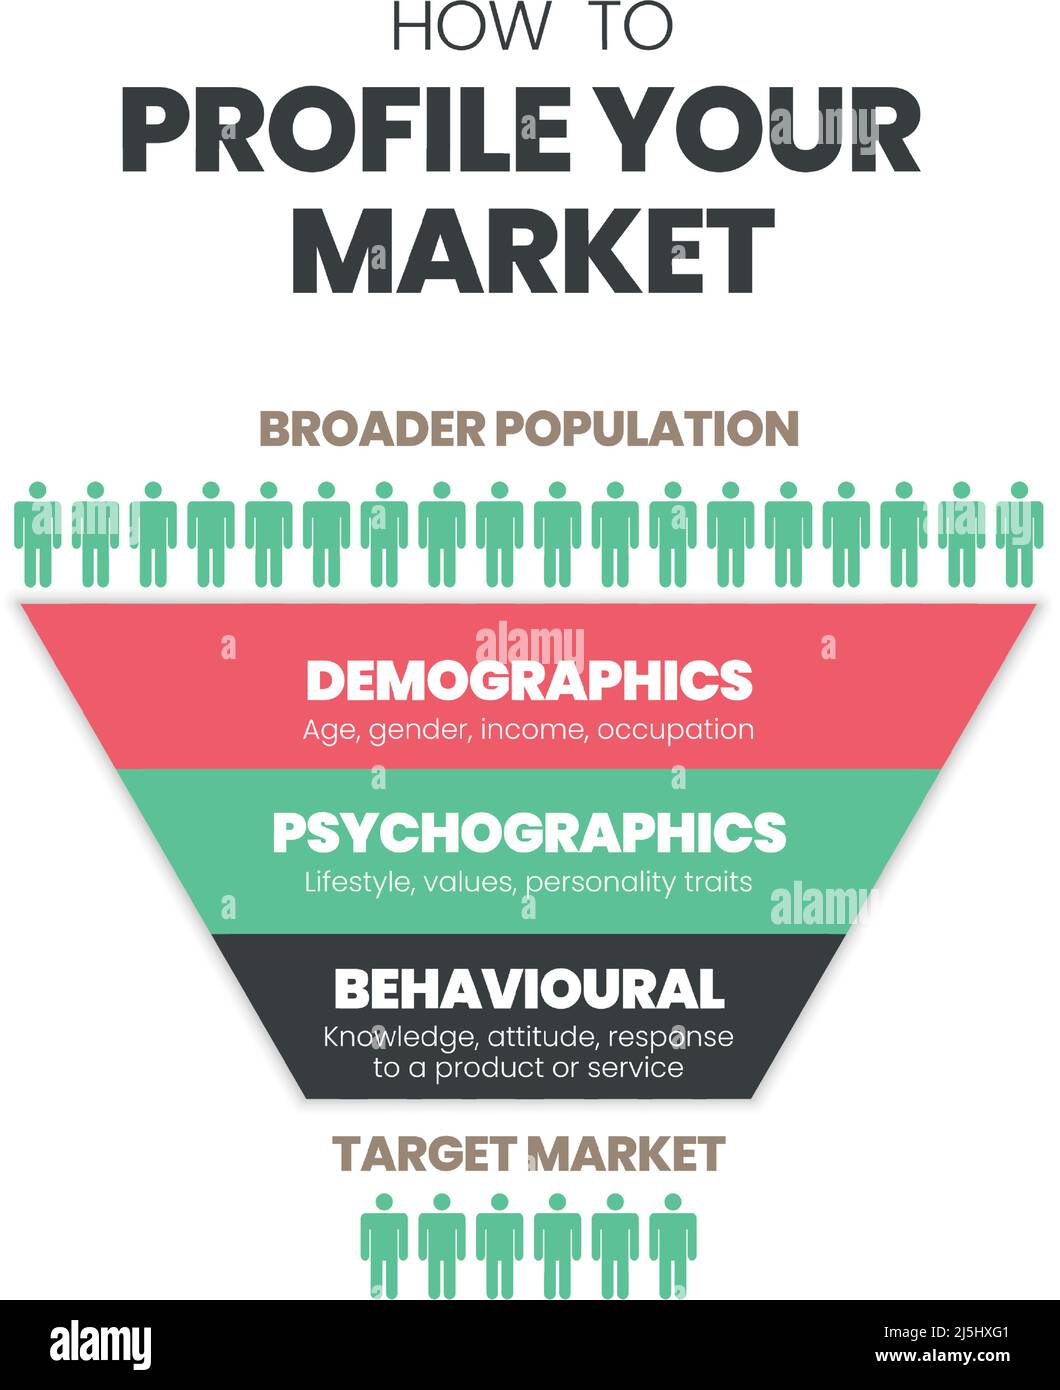 Digital market segmentation diagram Cut Out Stock Images & Pictures - Alamy